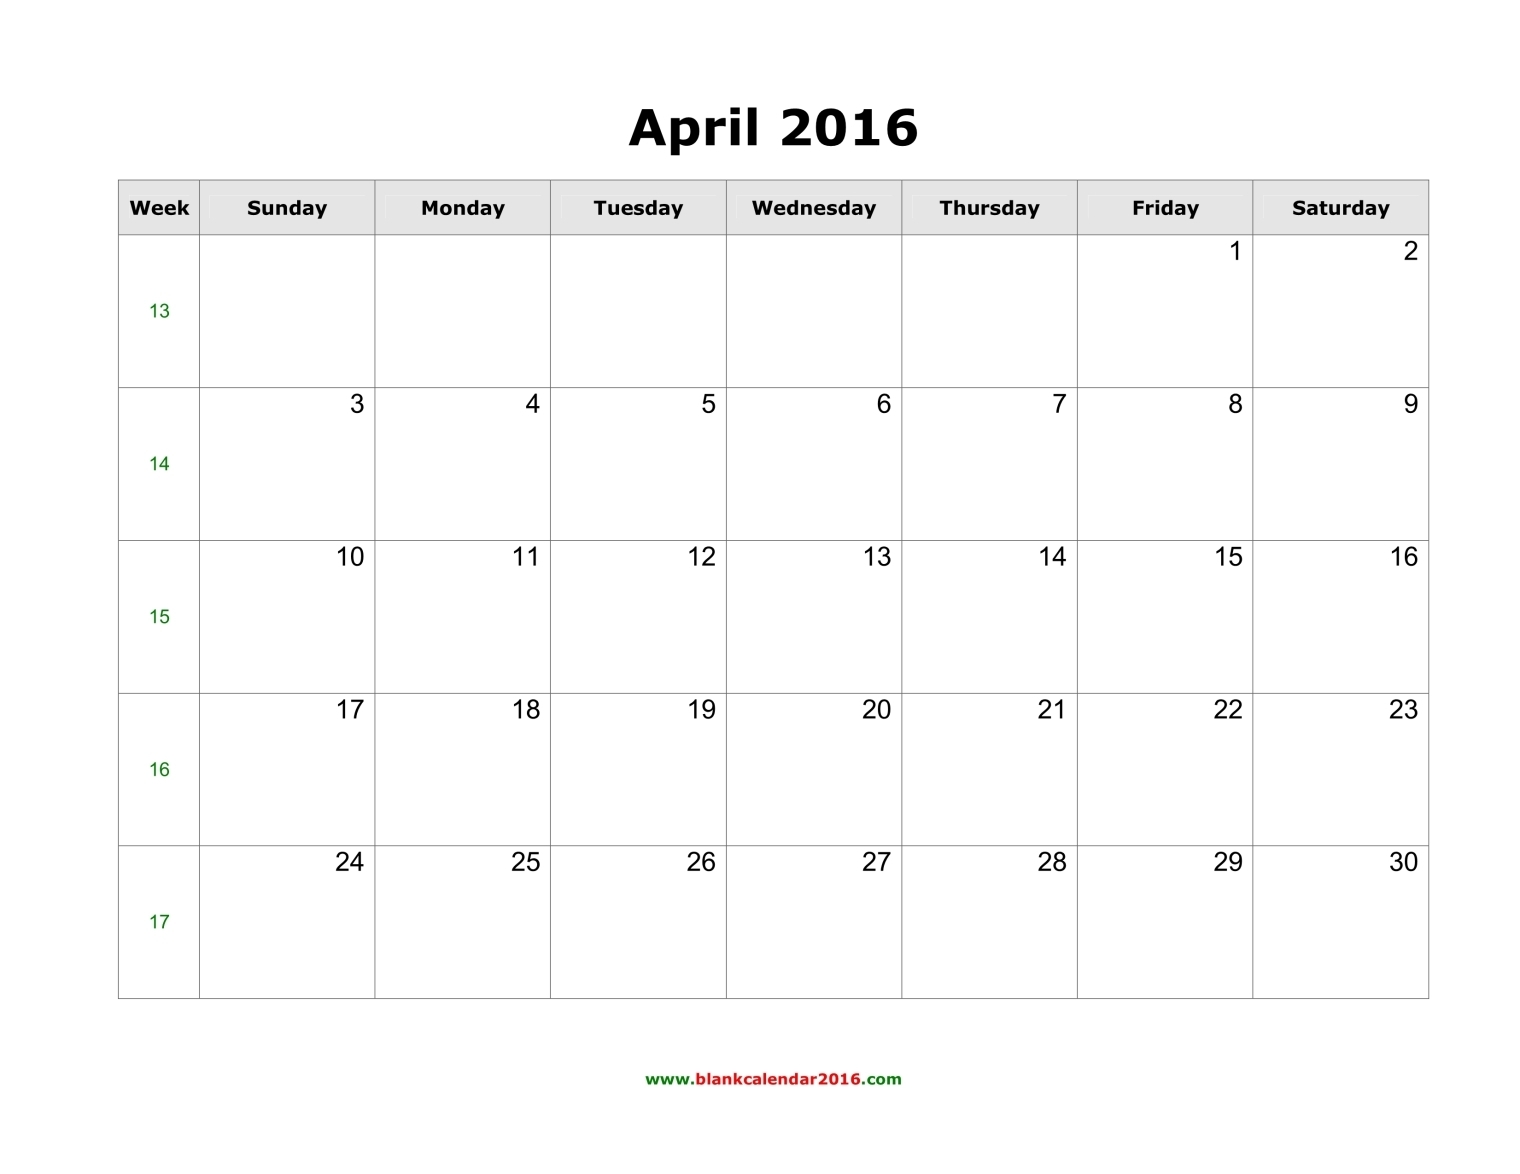 APRIL 2016 CALENDAR TEMPLATE PDF Free April Calendar